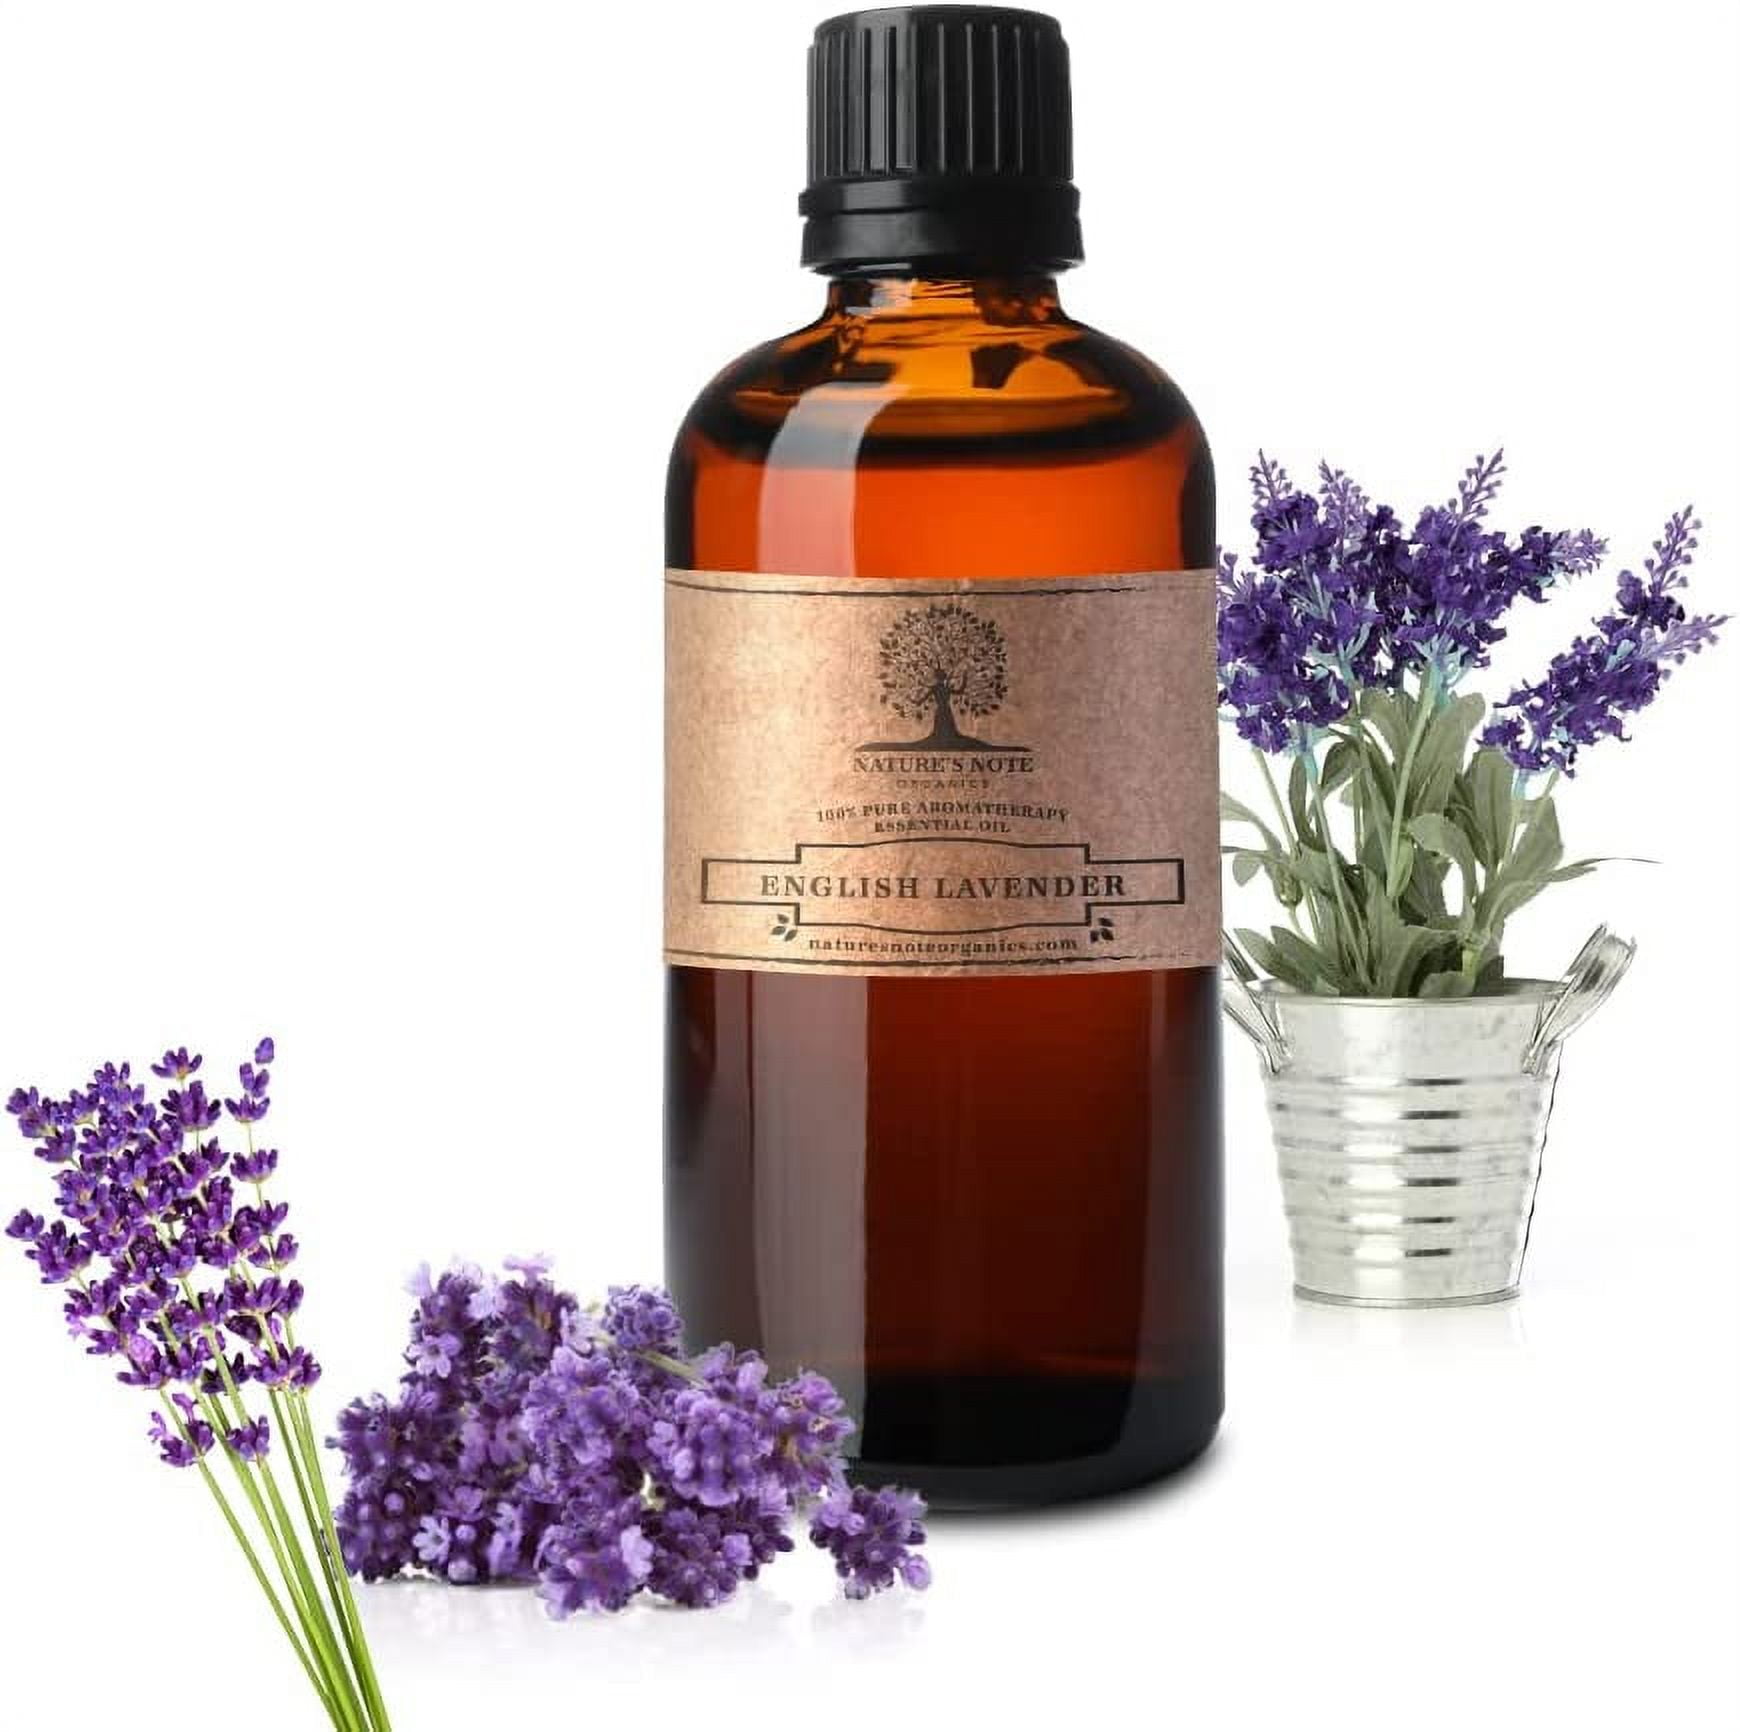 Perfume Oil Sunrise & Dusk  Lavender and Frankincense + Patchouli Van –  Freyja's Magic